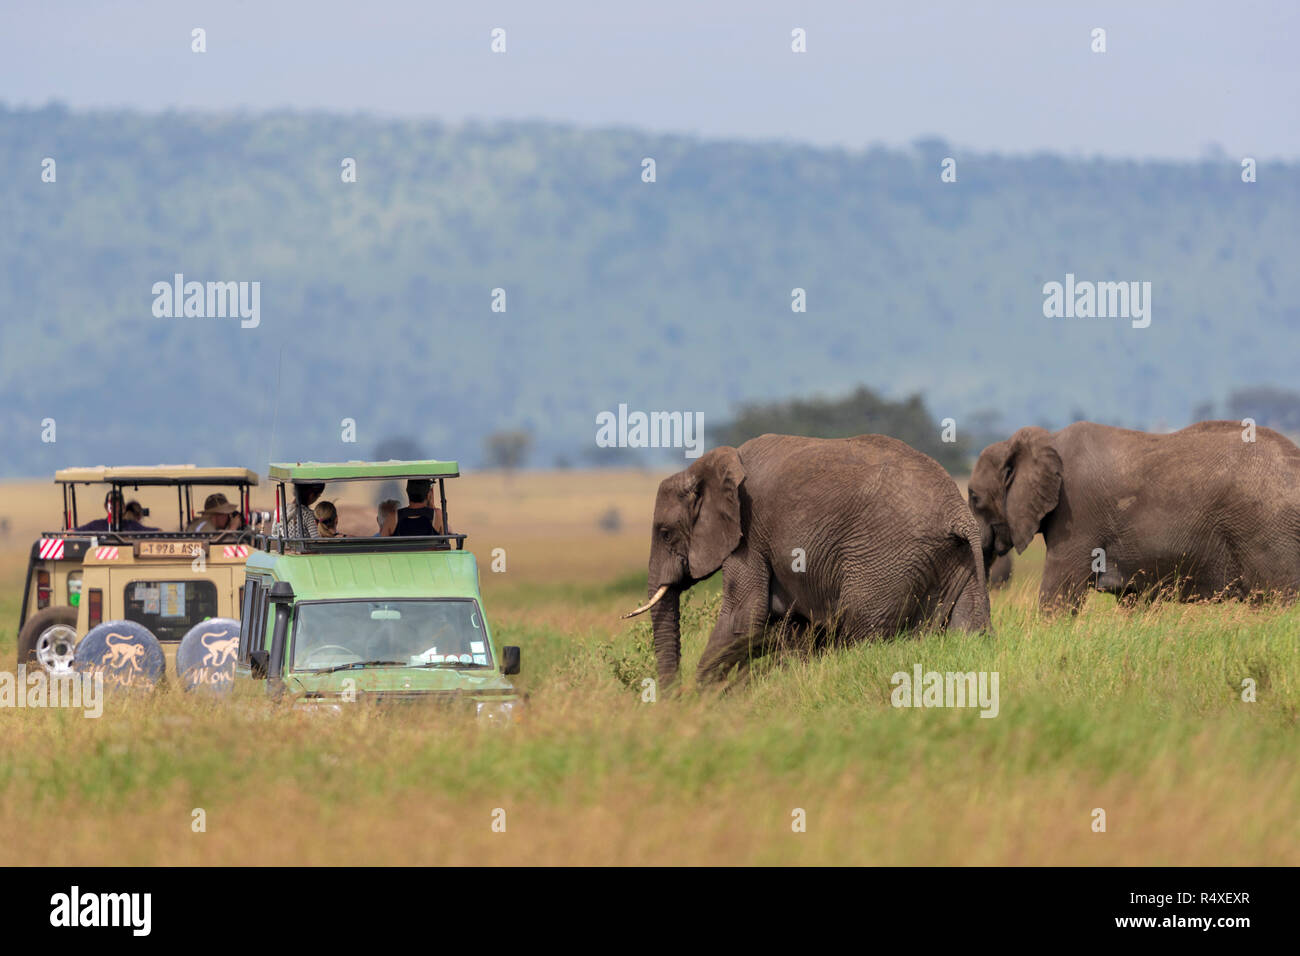 Natur Foto mit Blick auf zwei afrikanische Elefanten (LoxodontaÂ africana) in der Nähe von Autos - Safari, Serengeti National Park, Mara Region, Tansania Stockfoto